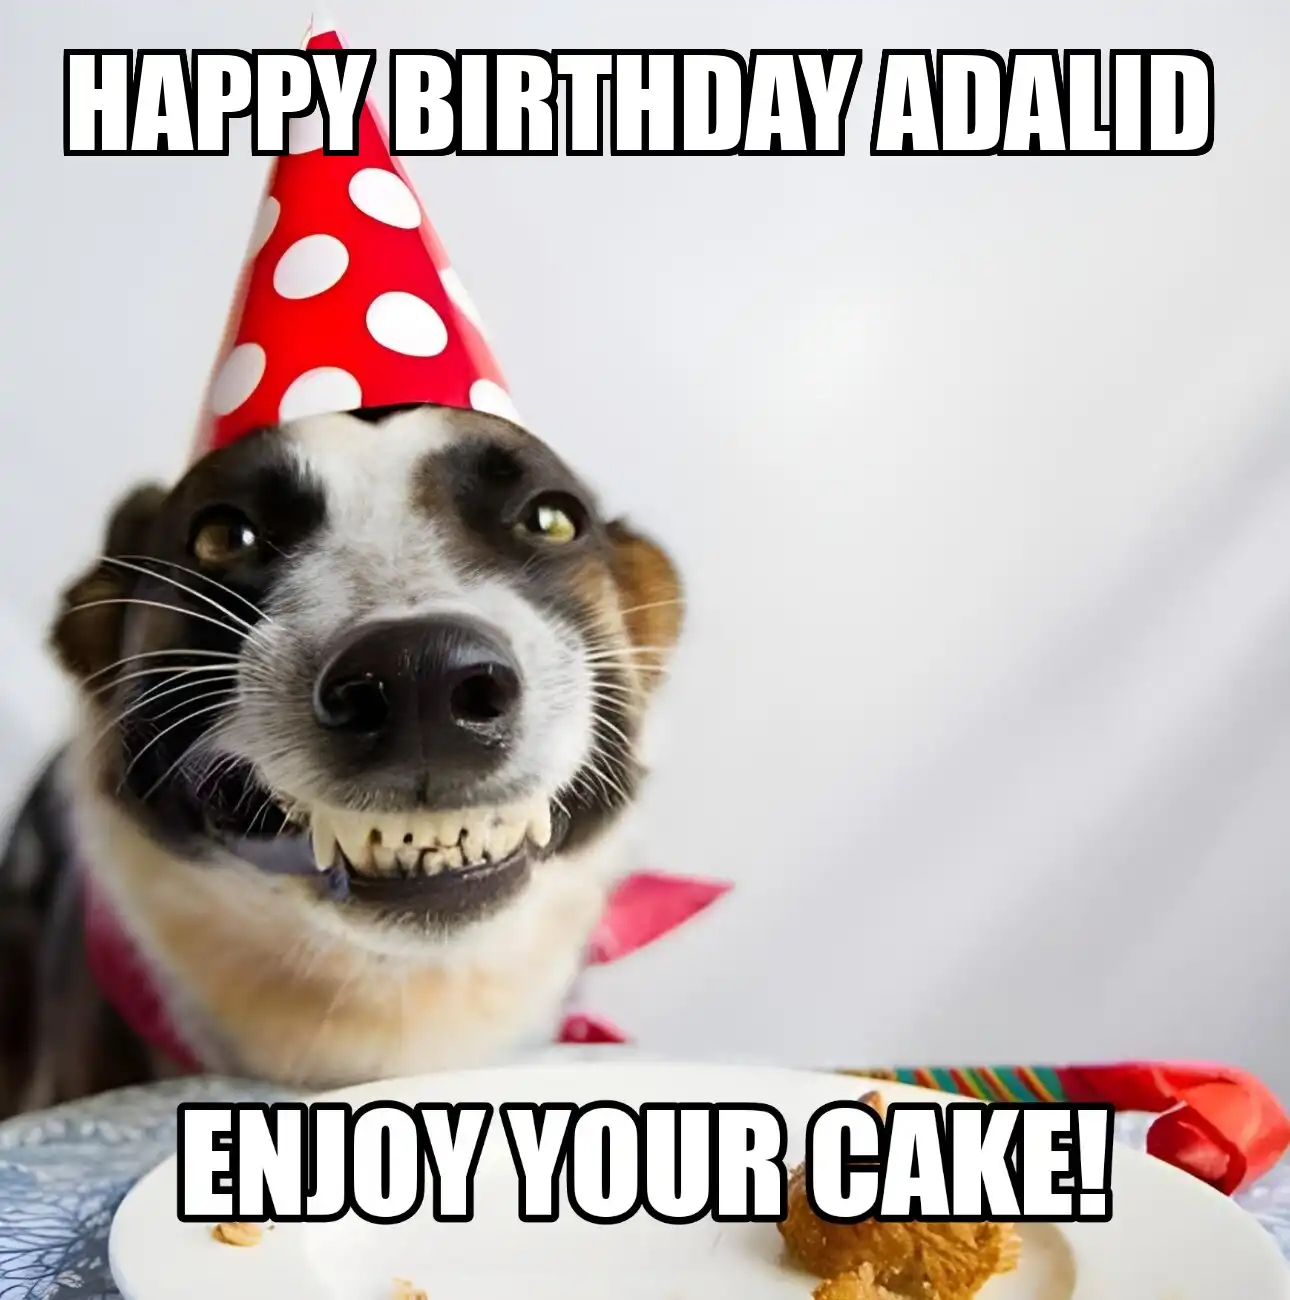 Happy Birthday Adalid Enjoy Your Cake Dog Meme